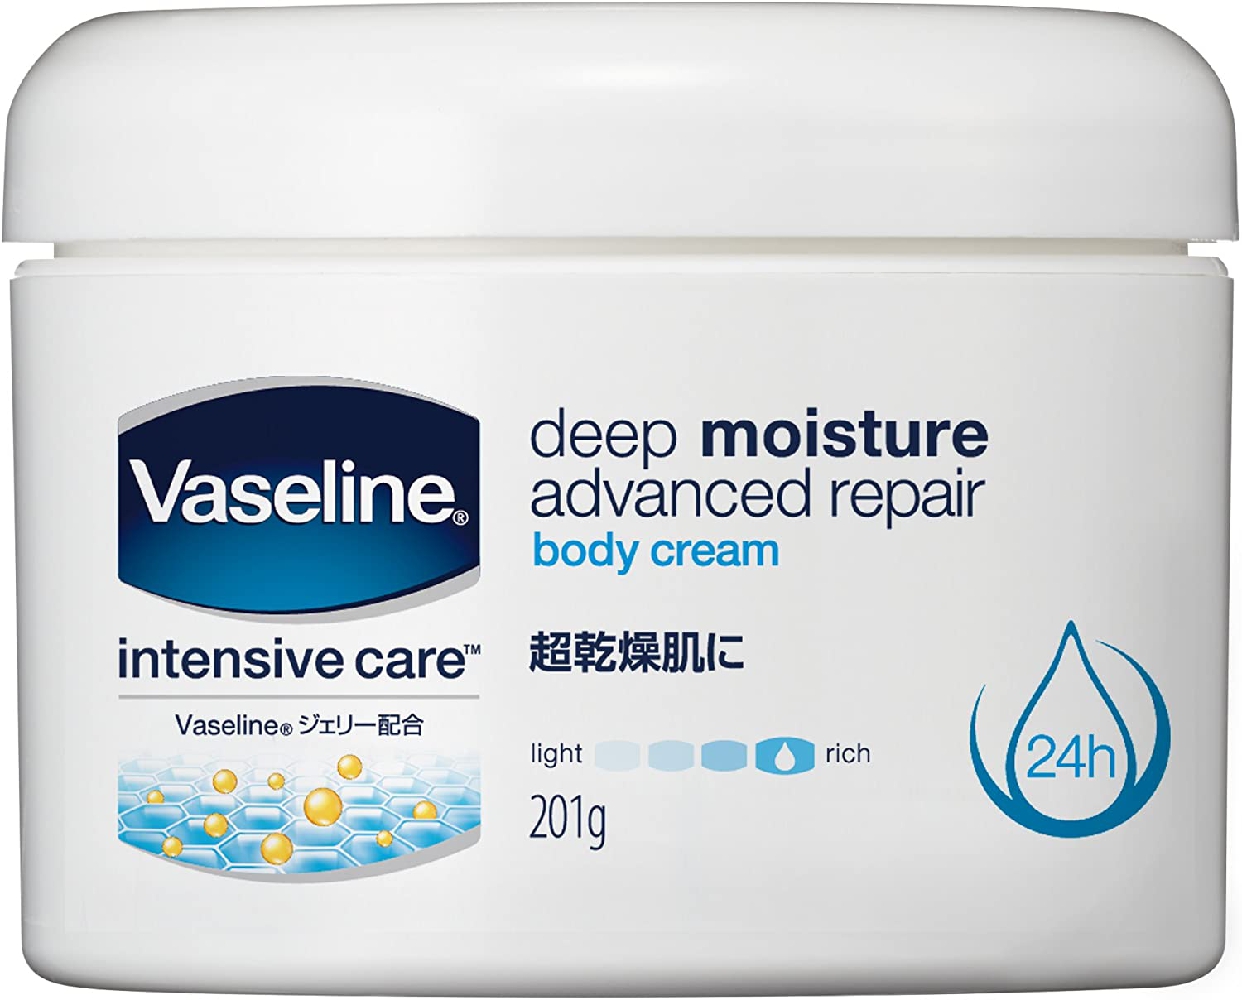 Vaseline(ヴァセリン) アドバンスドリペアボディクリームの商品画像2 